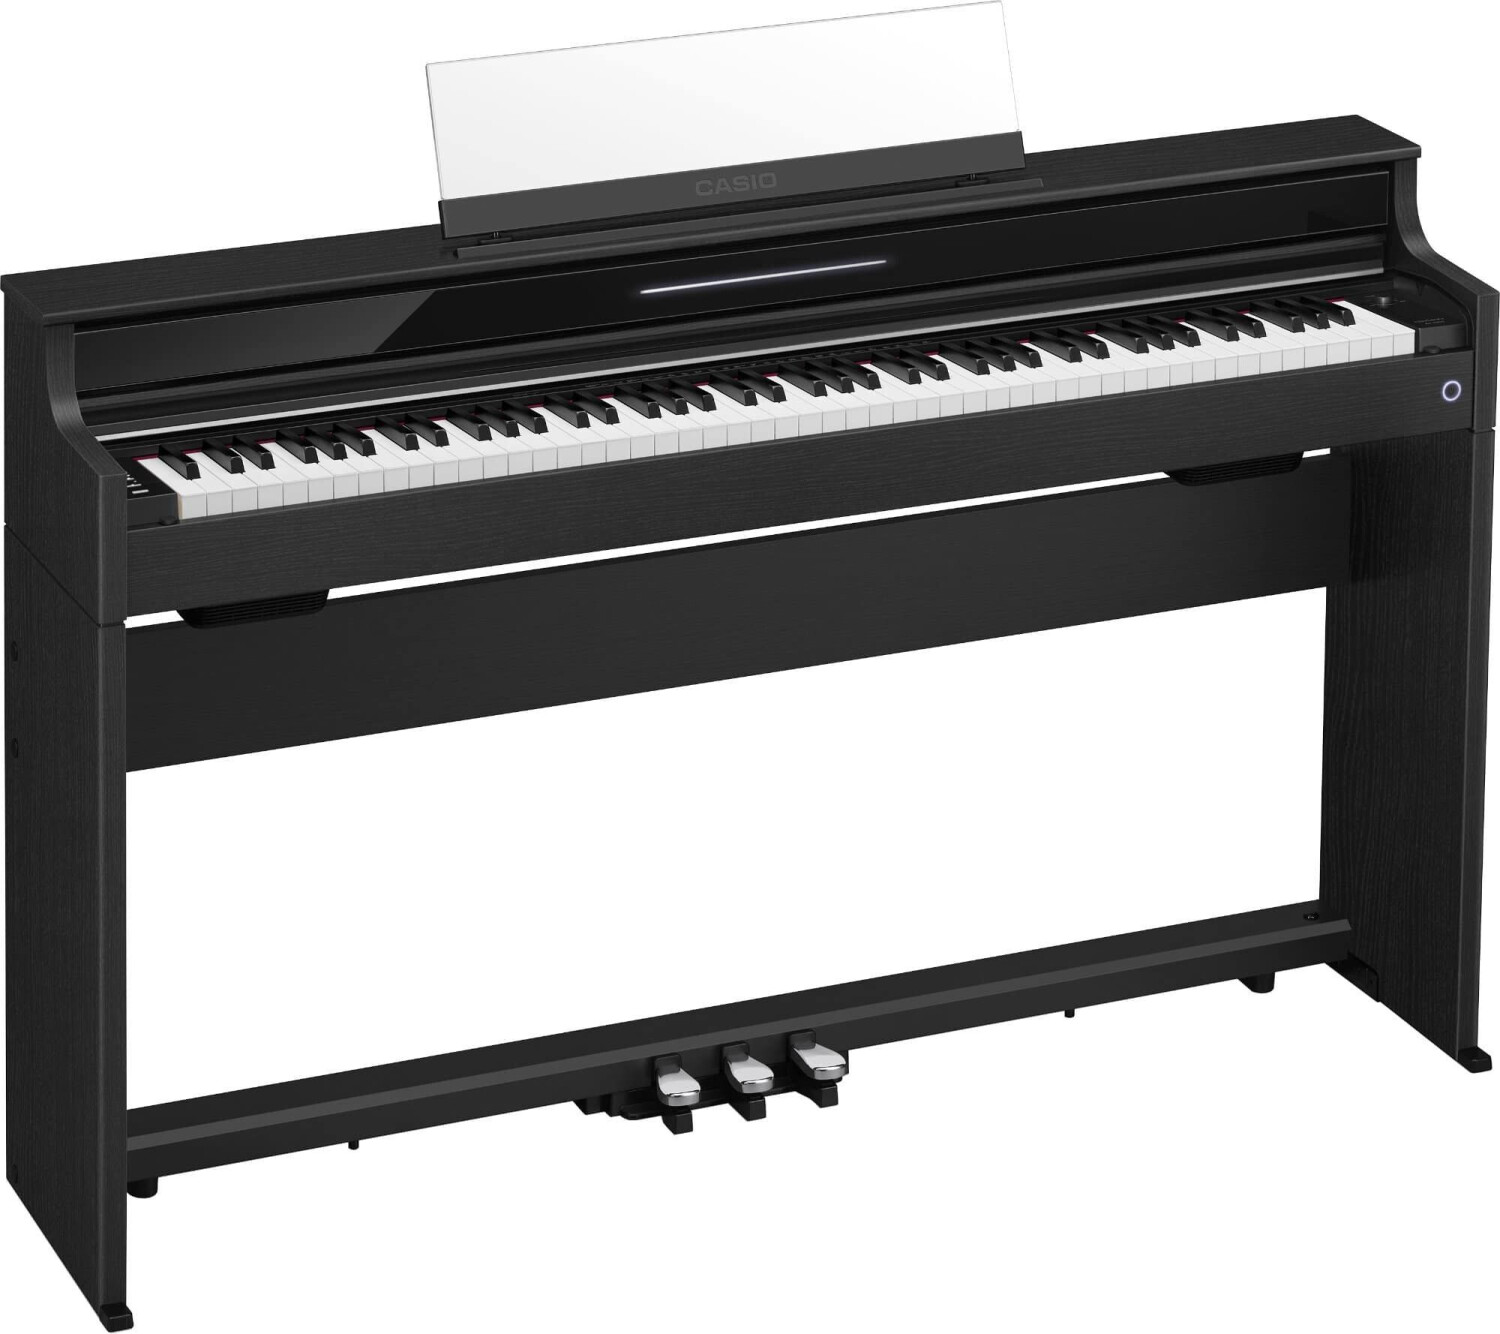 Photos - Digital Piano Casio AP-S450 Celviano BK black 